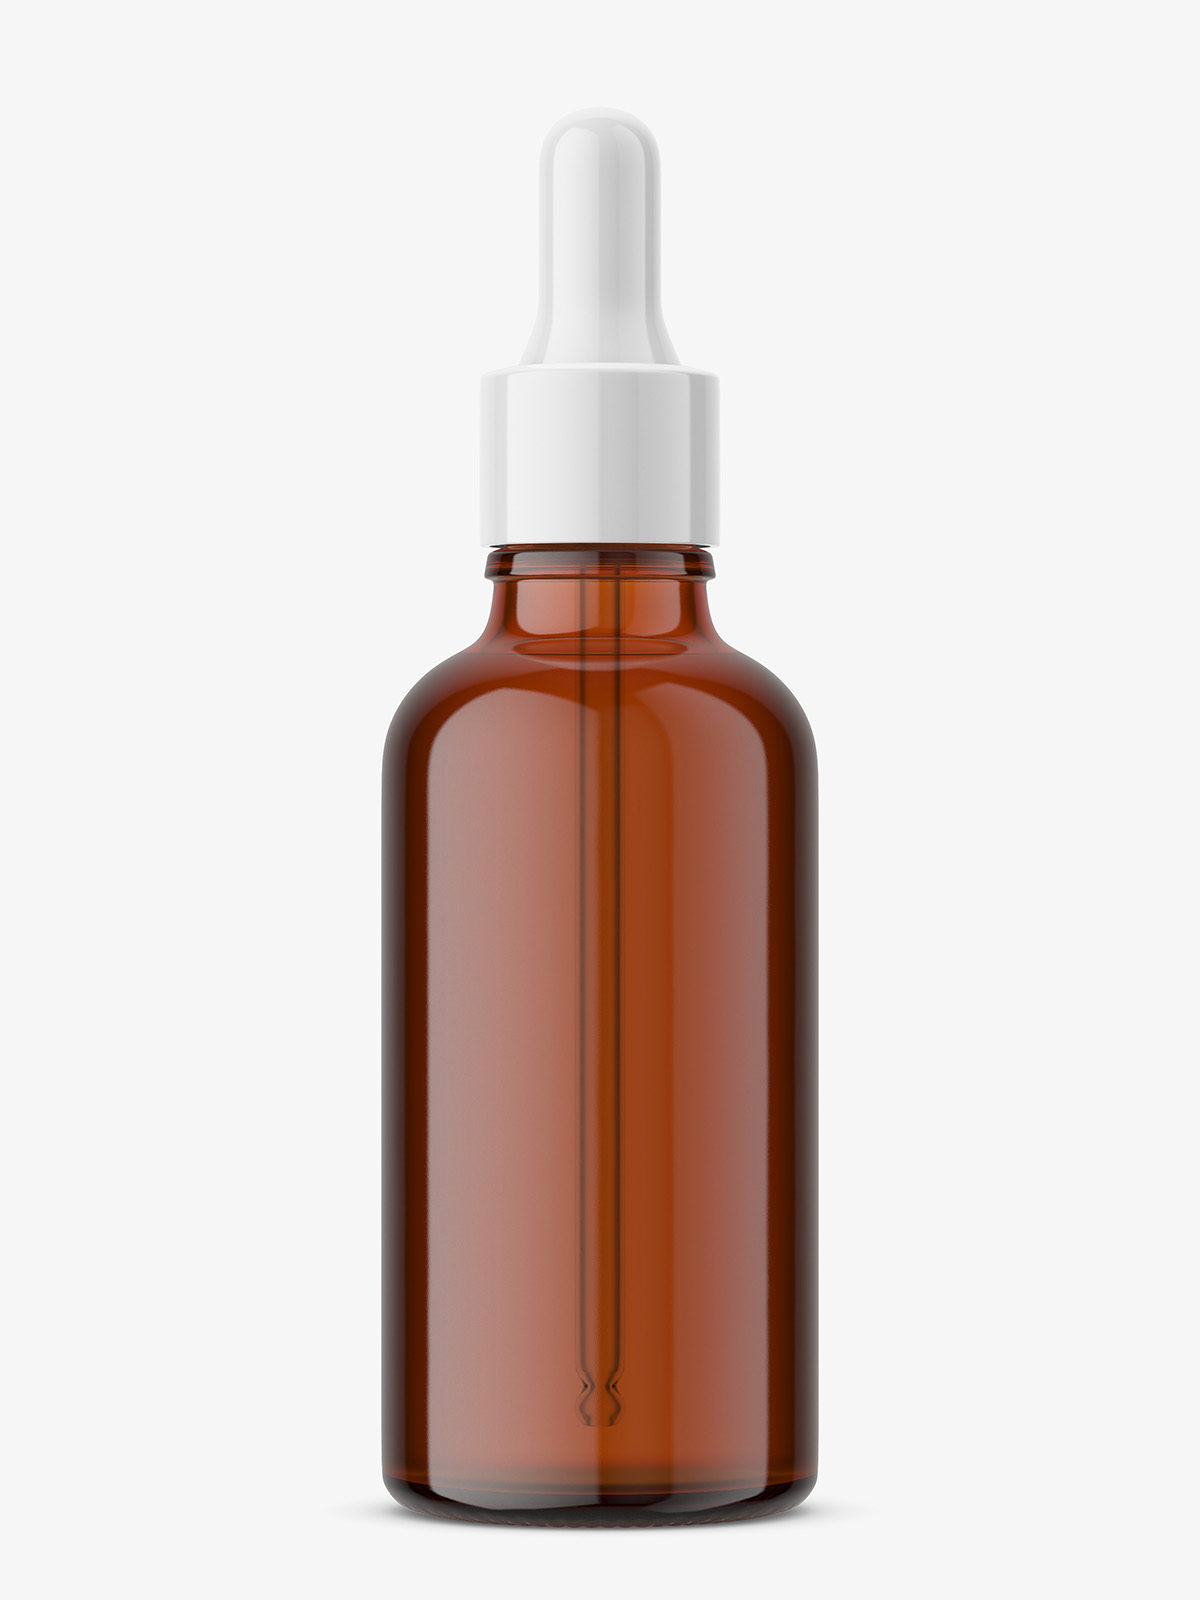 Amber dropper bottle mockup / 50 ml